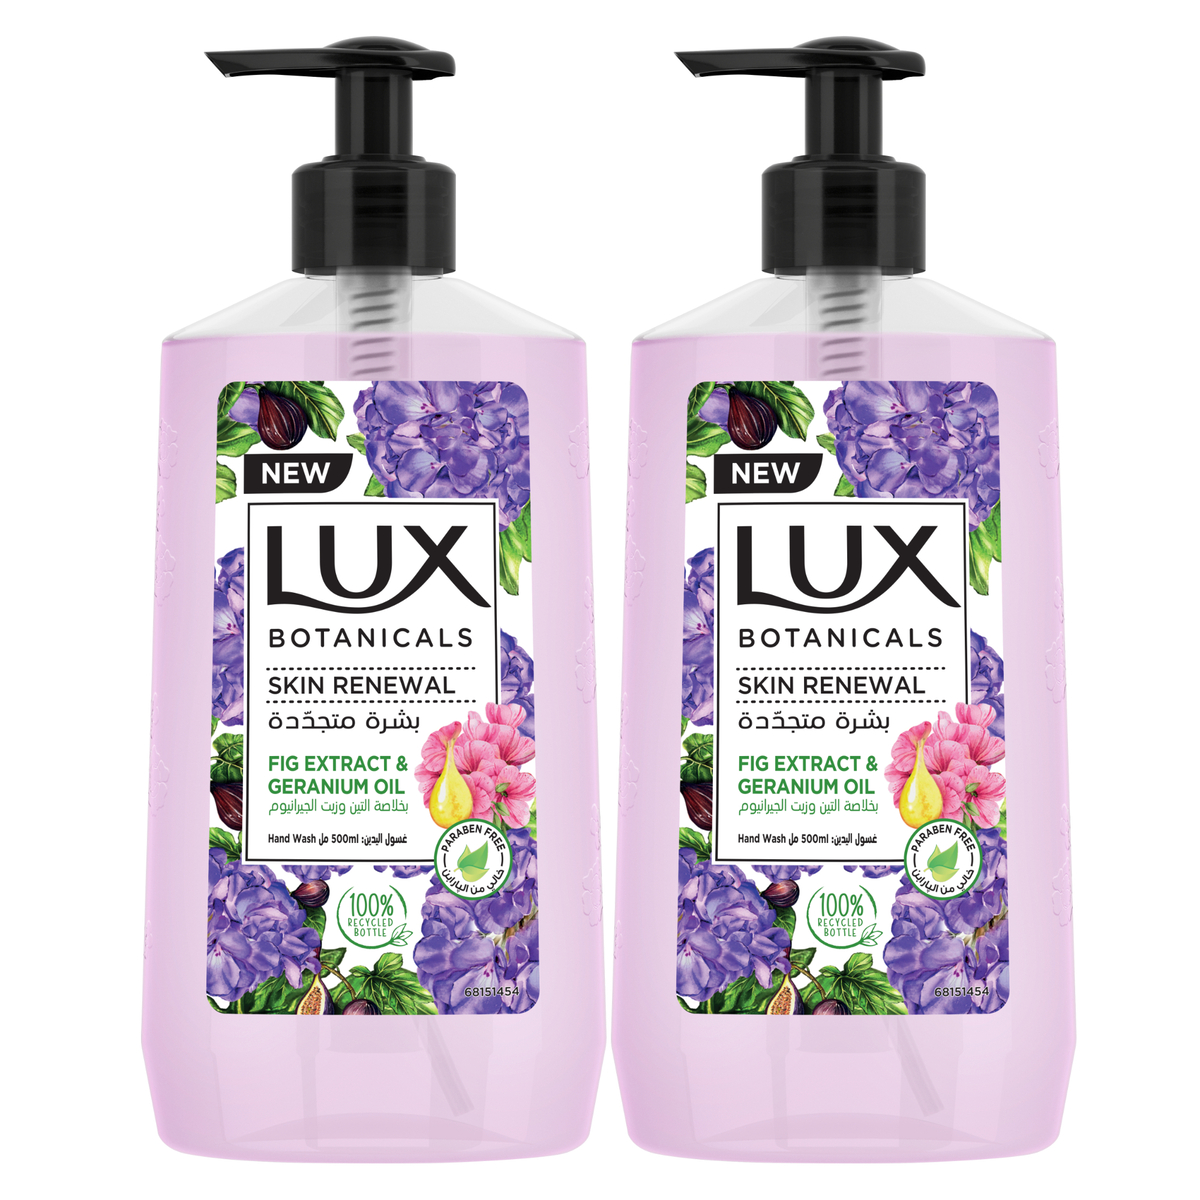 Lux Botanicals Skin Renewal Fig Extract & Geranium Oil Handwash 2 x 250 ml